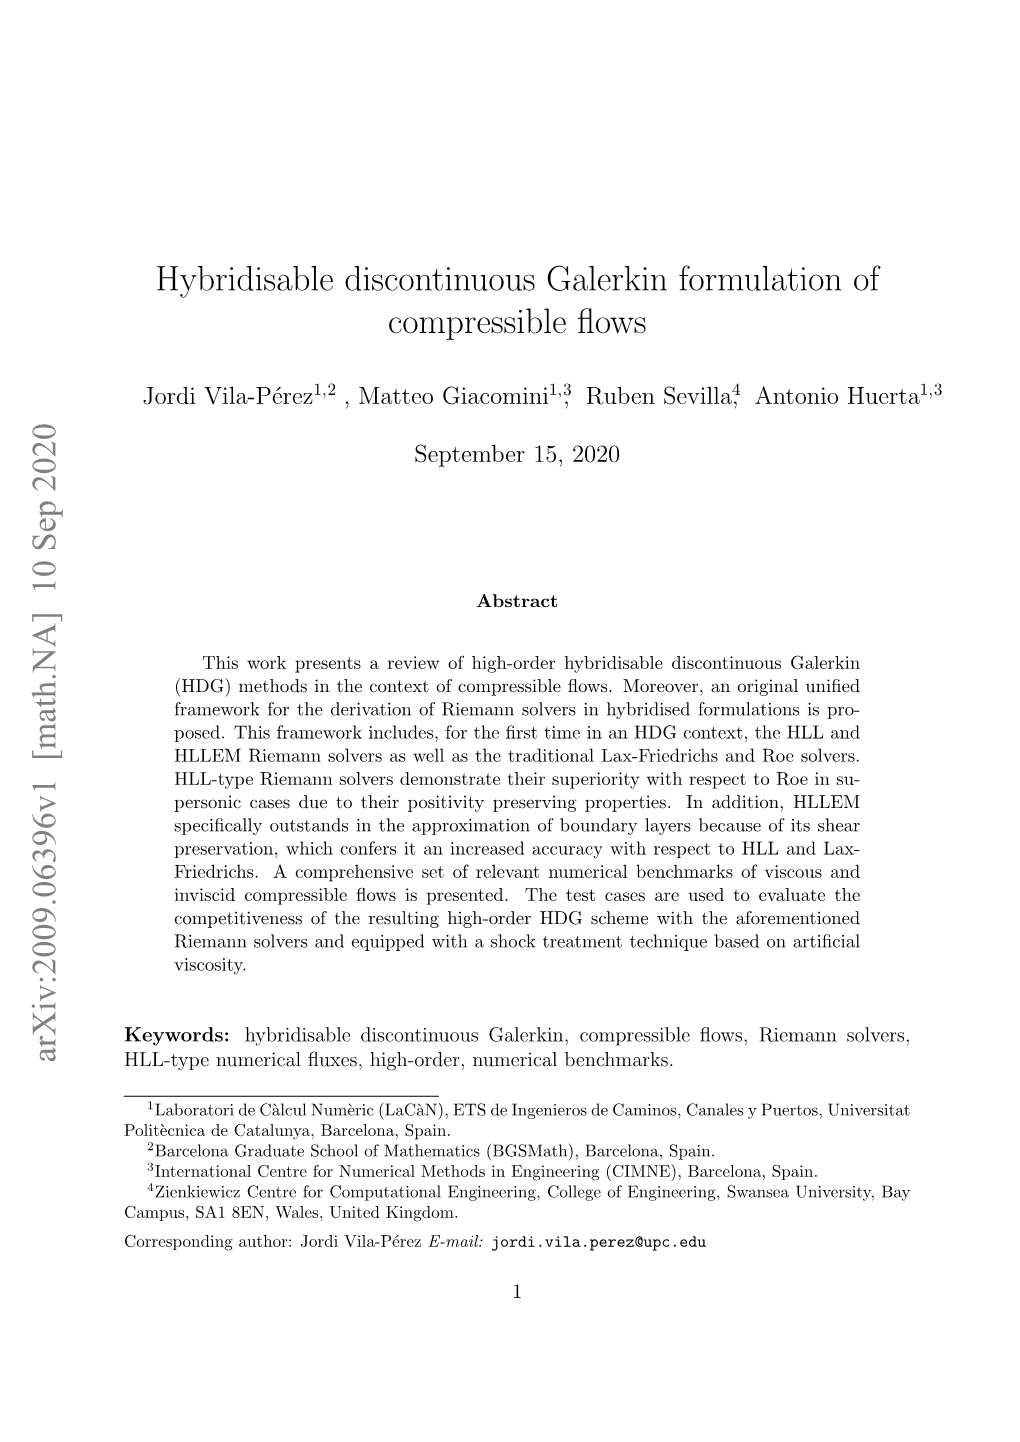 Hybridisable Discontinuous Galerkin Formulation of Compressible Flows